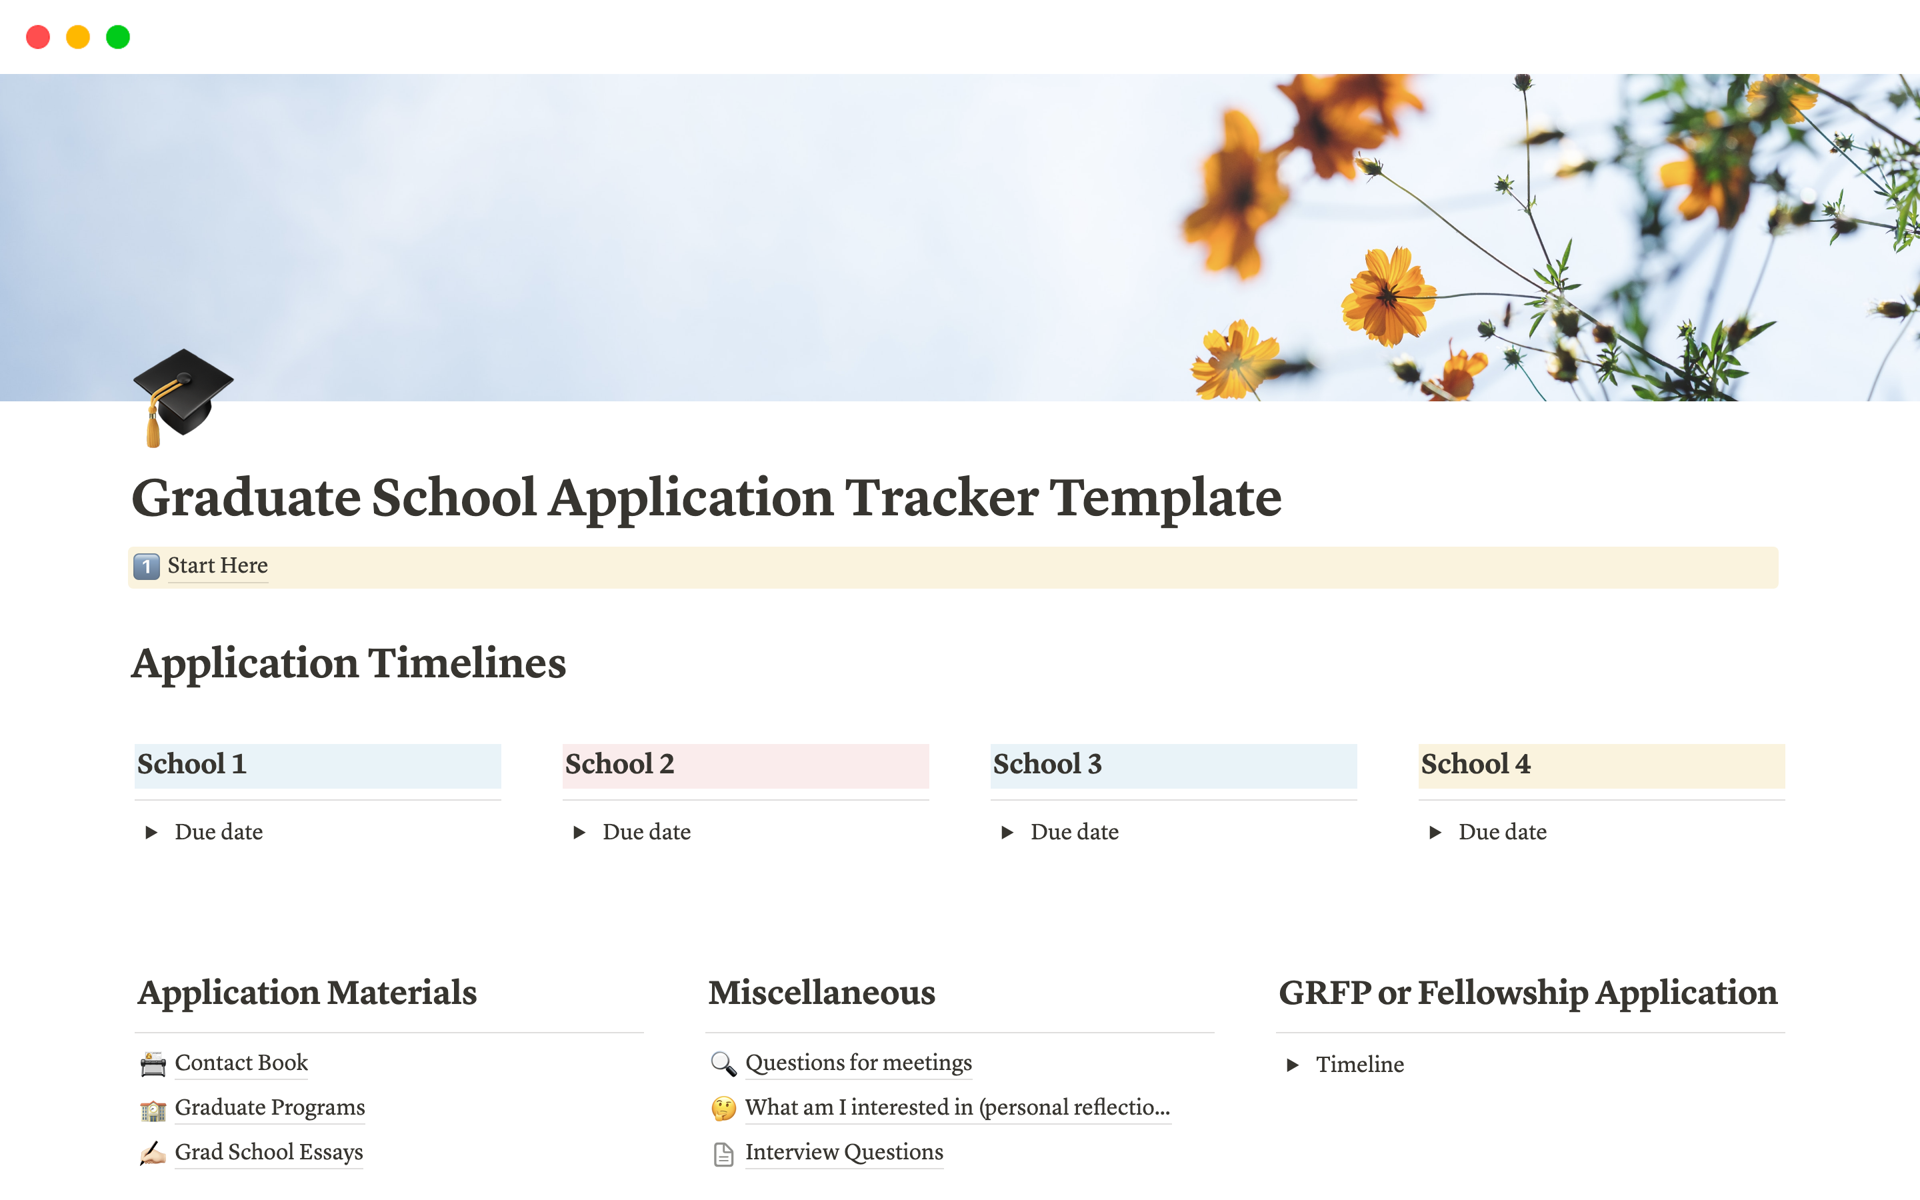 Help individuals track their graduate school applications 